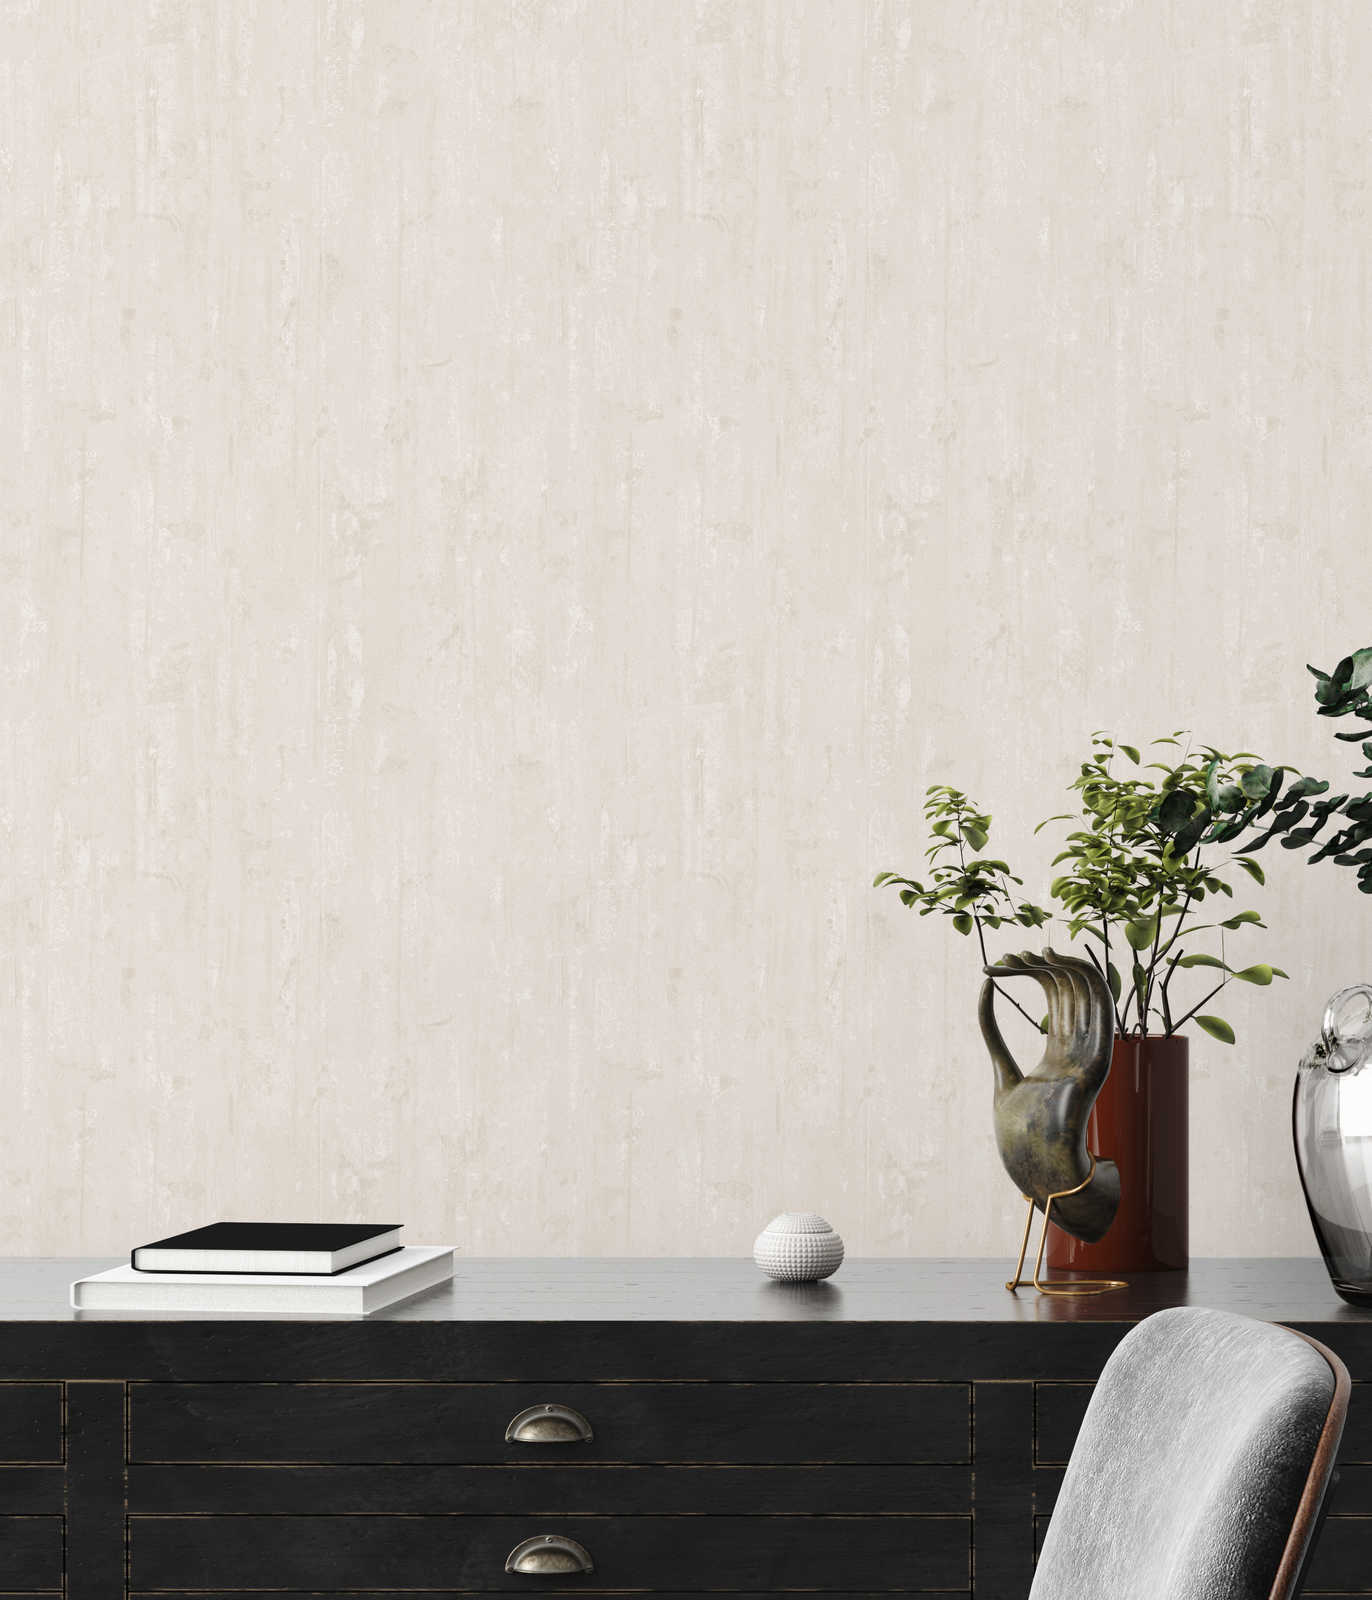             Non-woven wallpaper plain, wood texture faded - cream
        